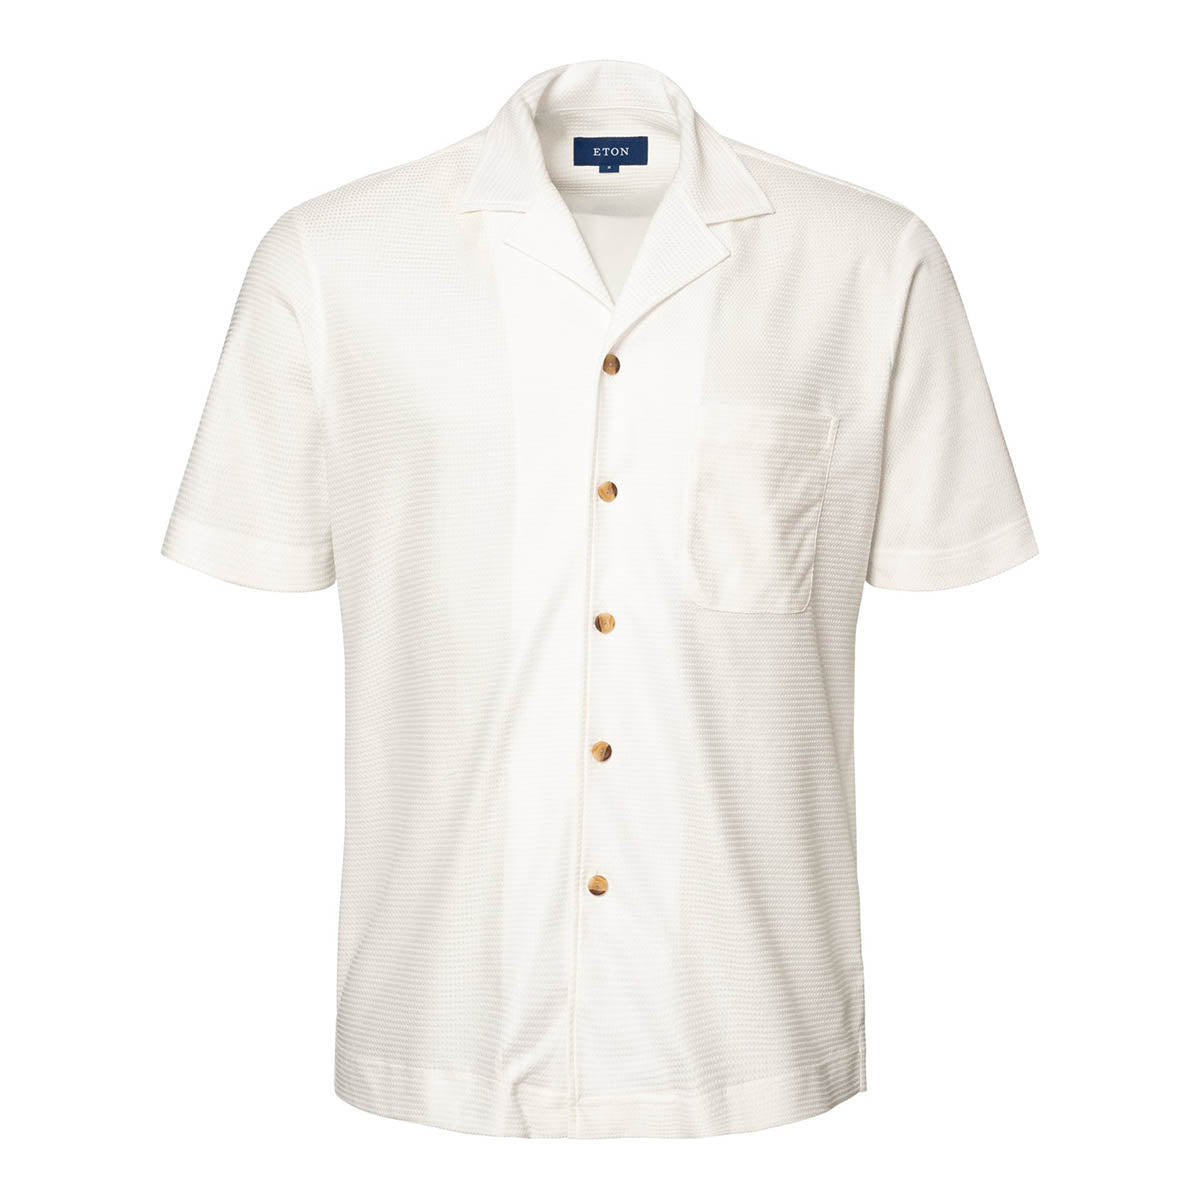 White Filo Di Scozia Jacquard Resort Shirt  Eton   